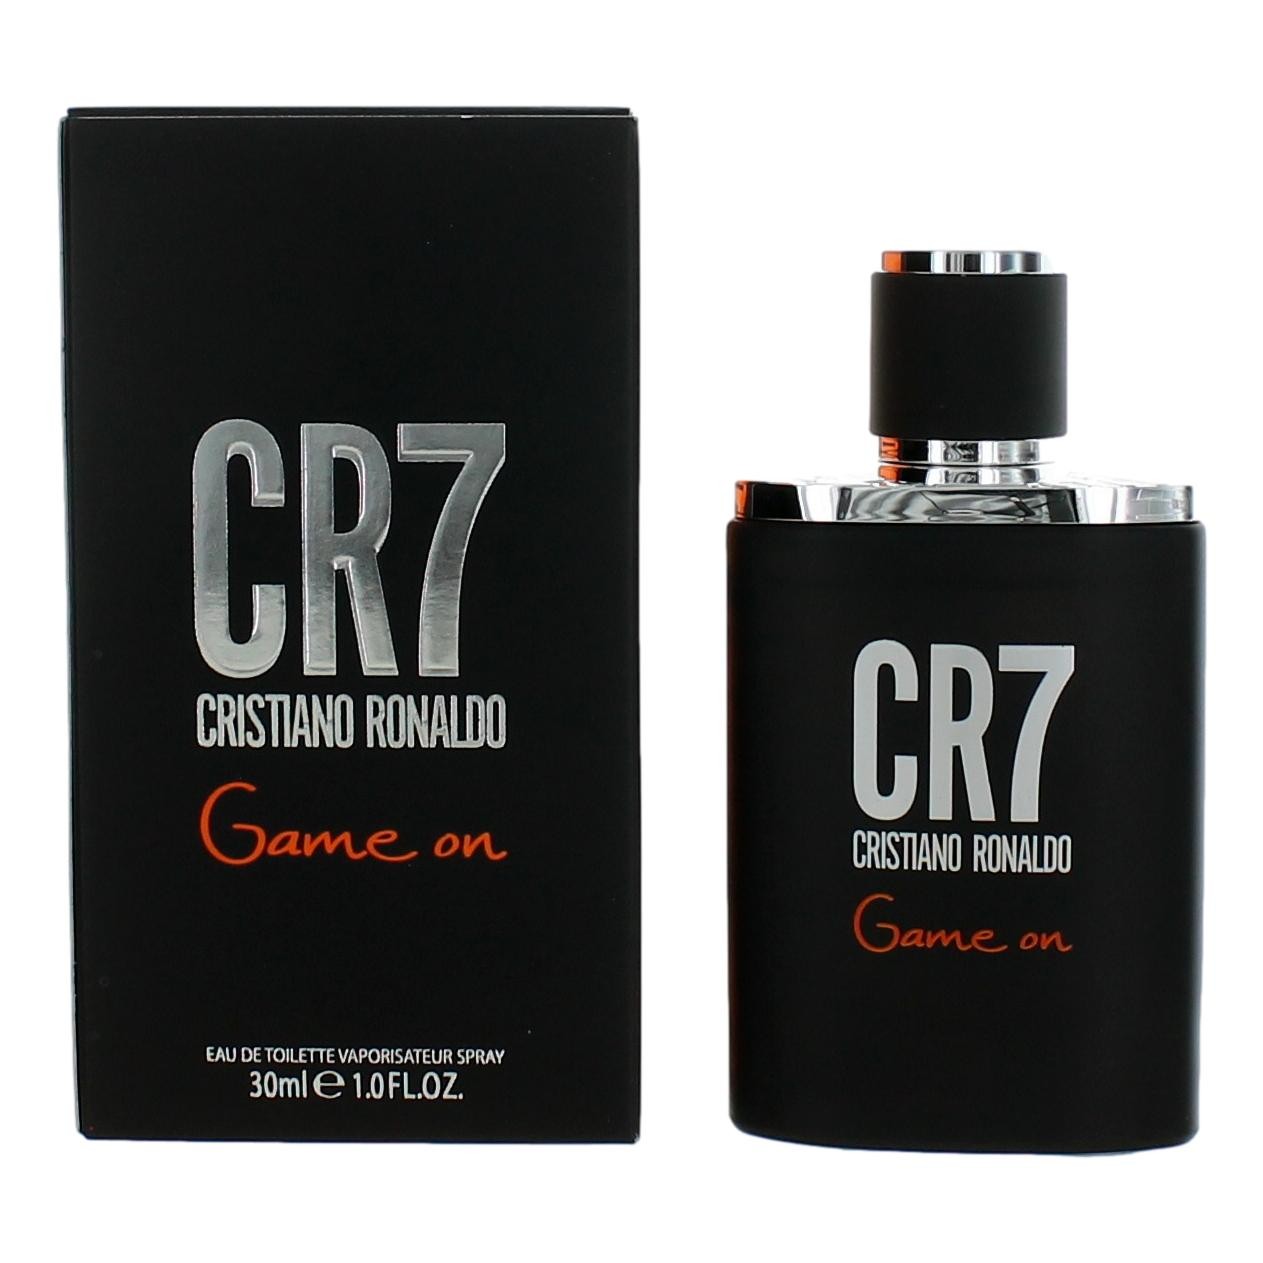 CR7 Game On by Cristiano Ronaldo 1 oz Eau De Toilette Spray for Men